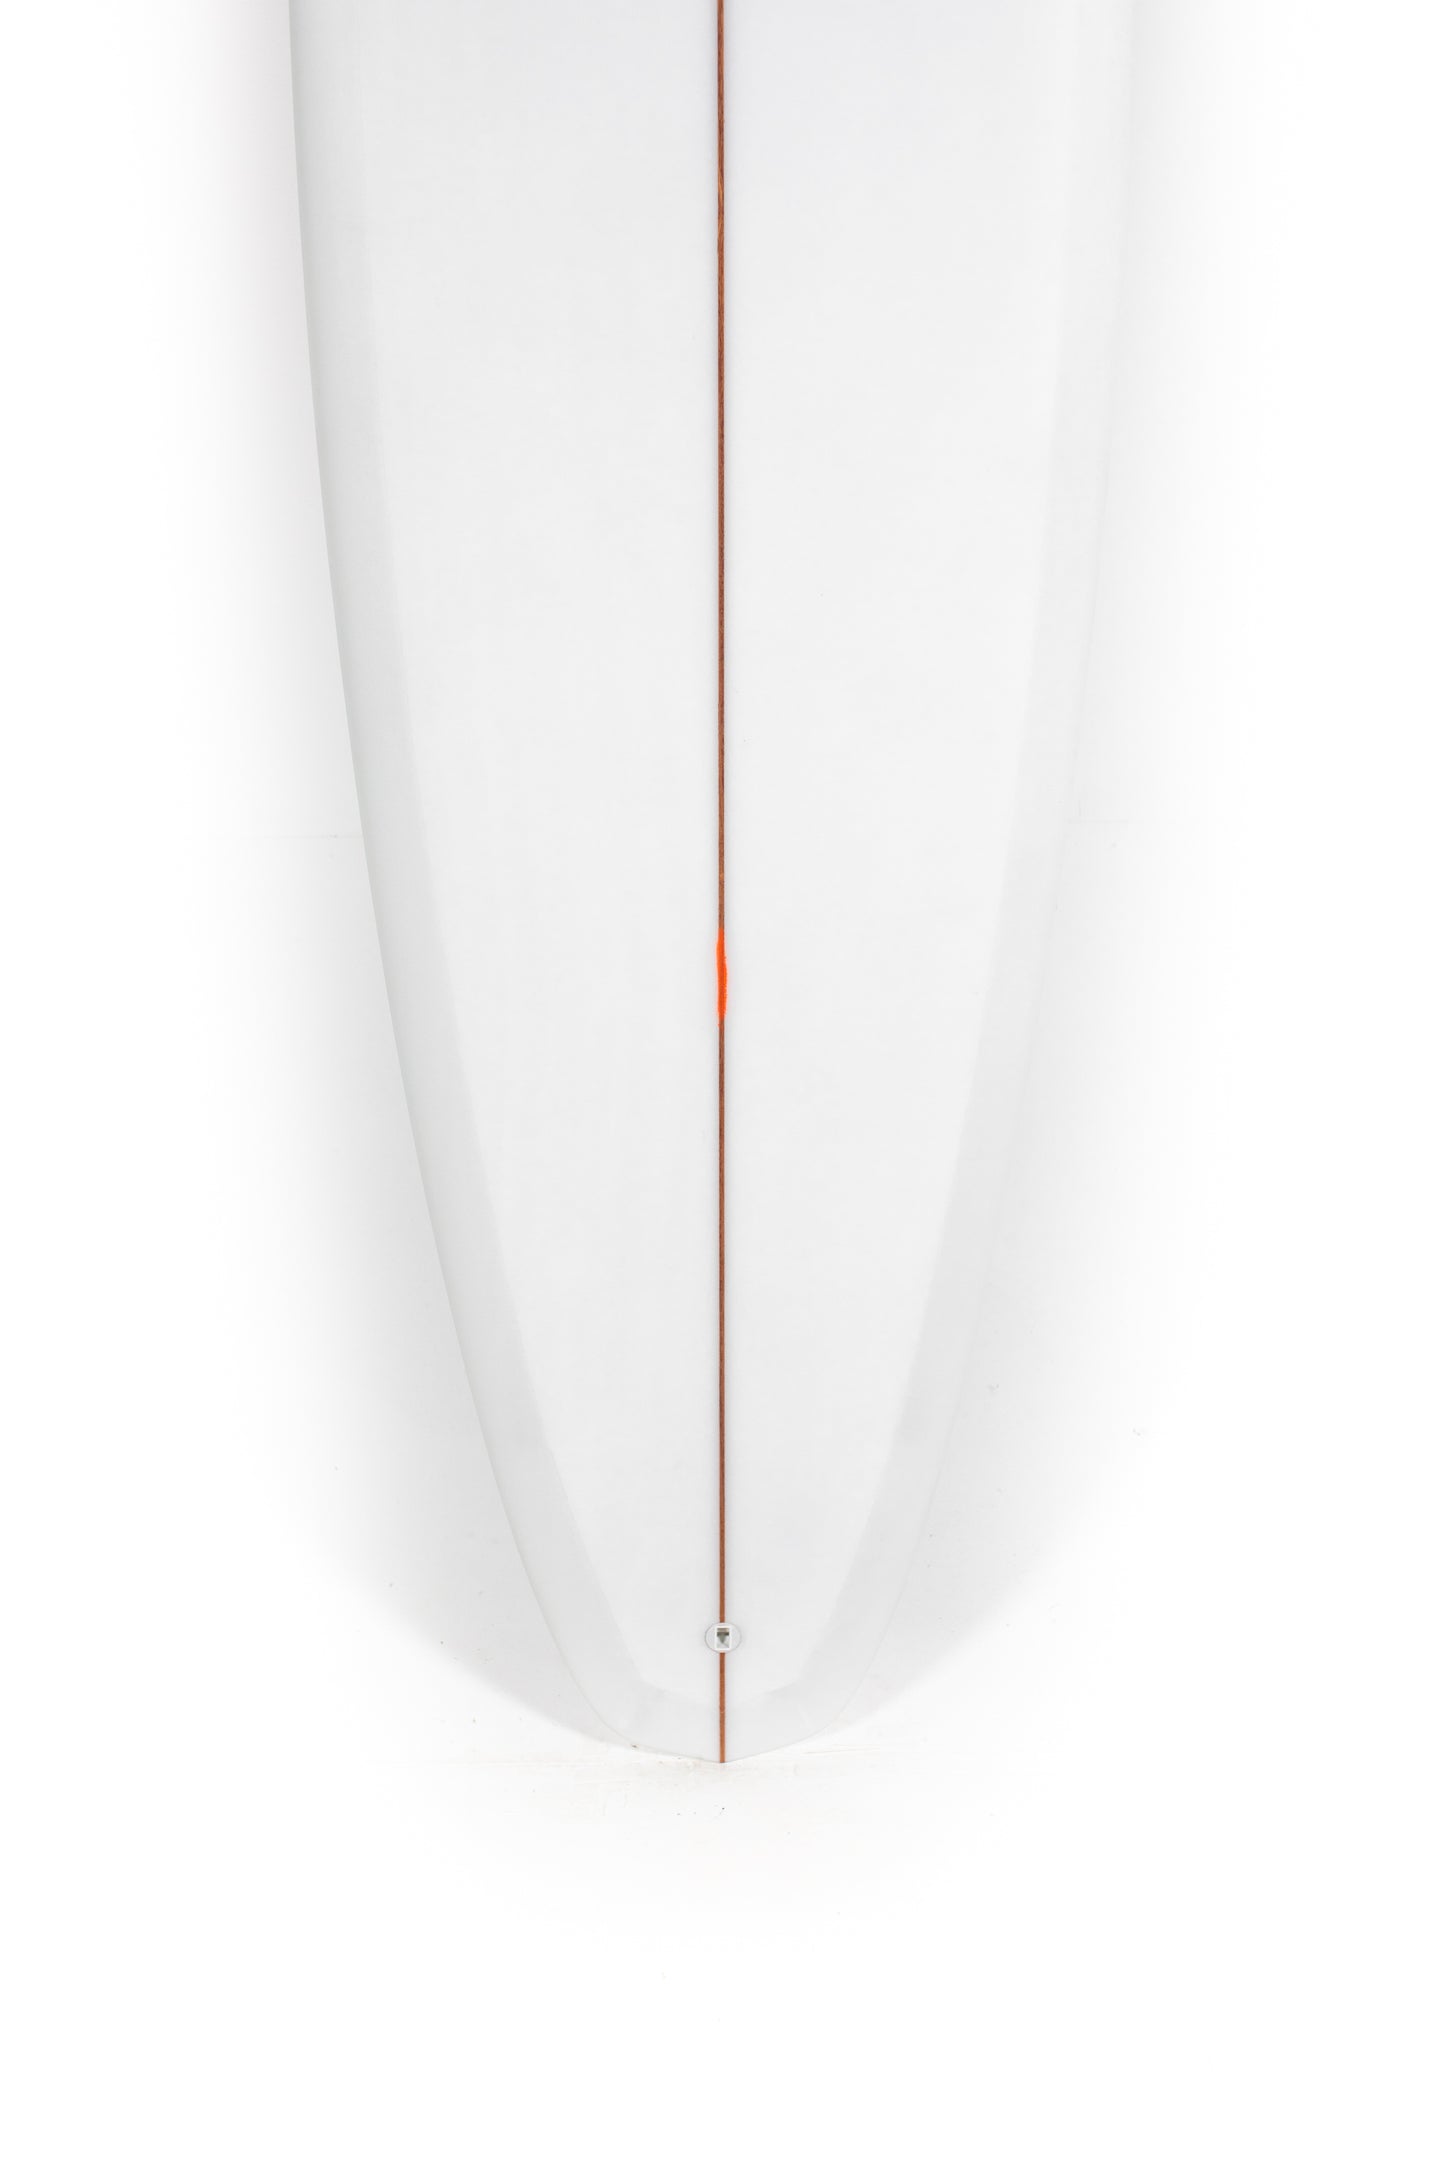 
                  
                    Pukas Surf Shop Christenson Surfboards - ULTRA TRACKER TWIN - 7'0" x 21 1/4 x 2 7/8 - CX05165
                  
                